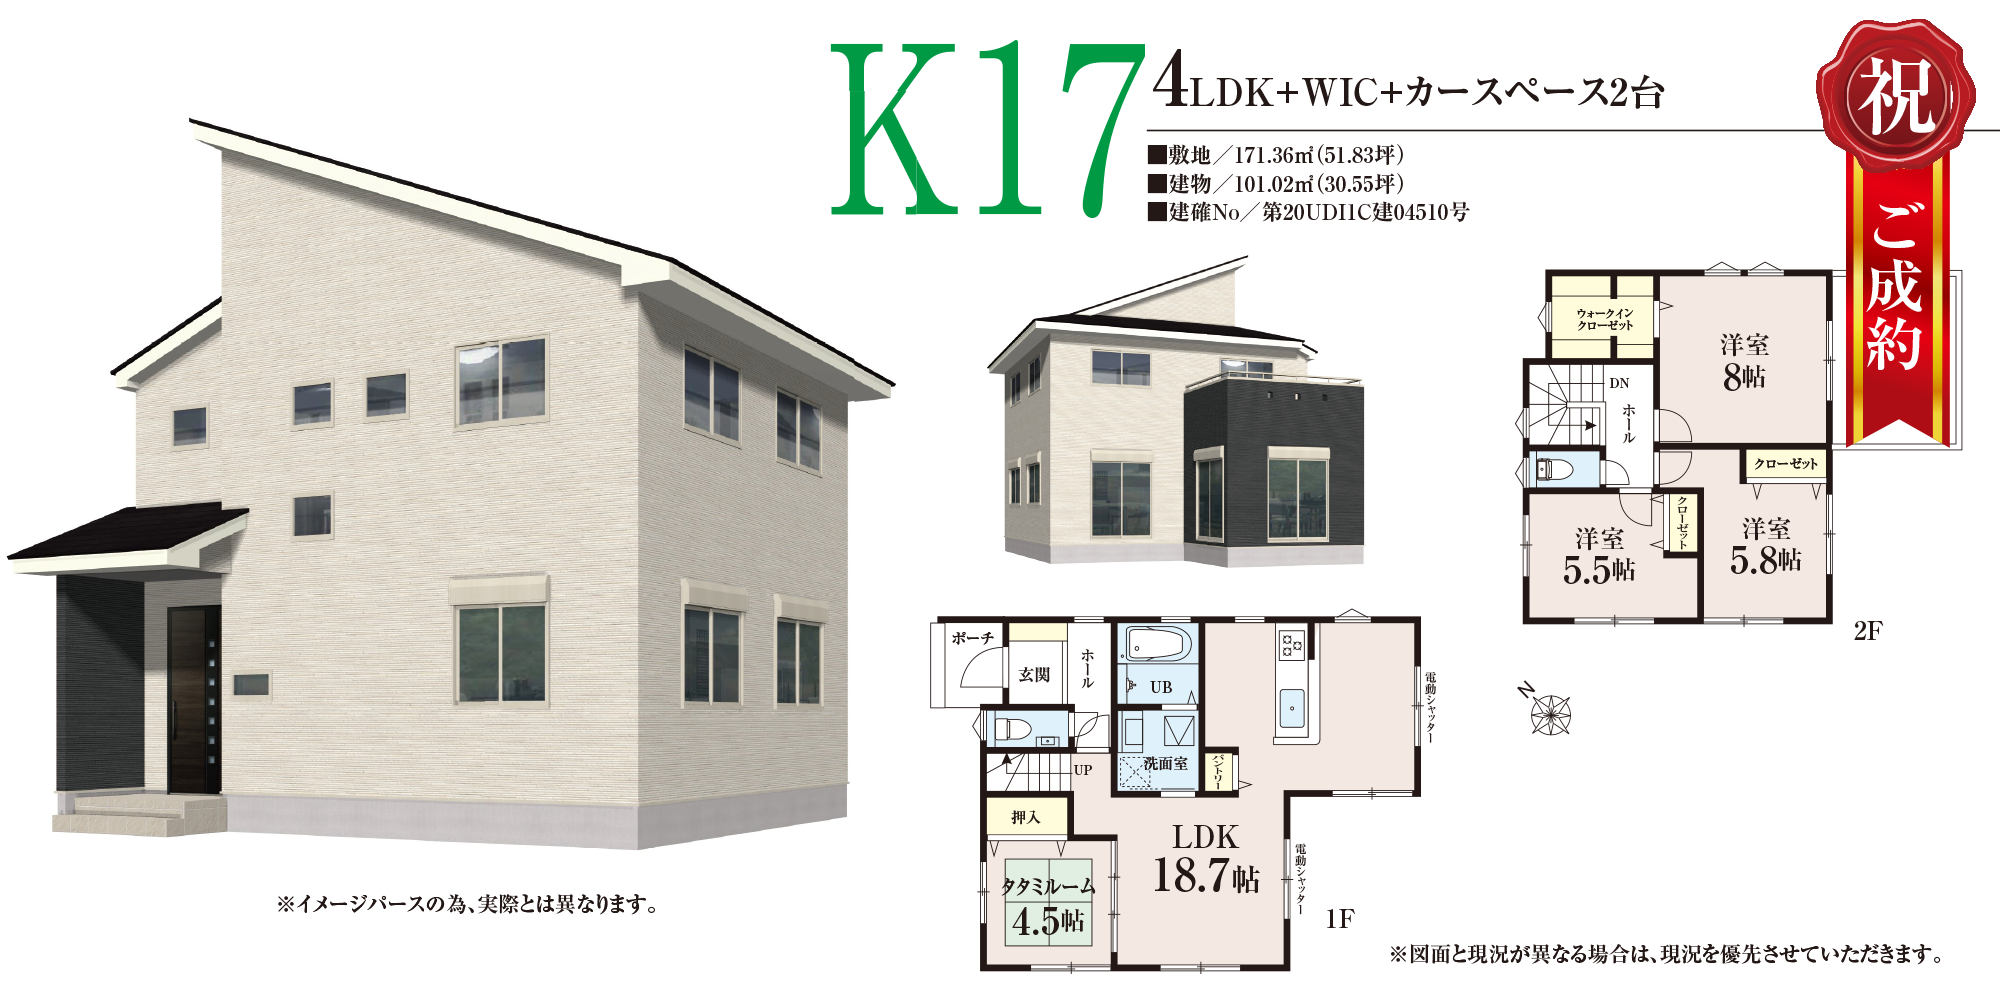 K17 4LDK＋WIC＋SIC＋カースペース2台 デザイナーズハウス